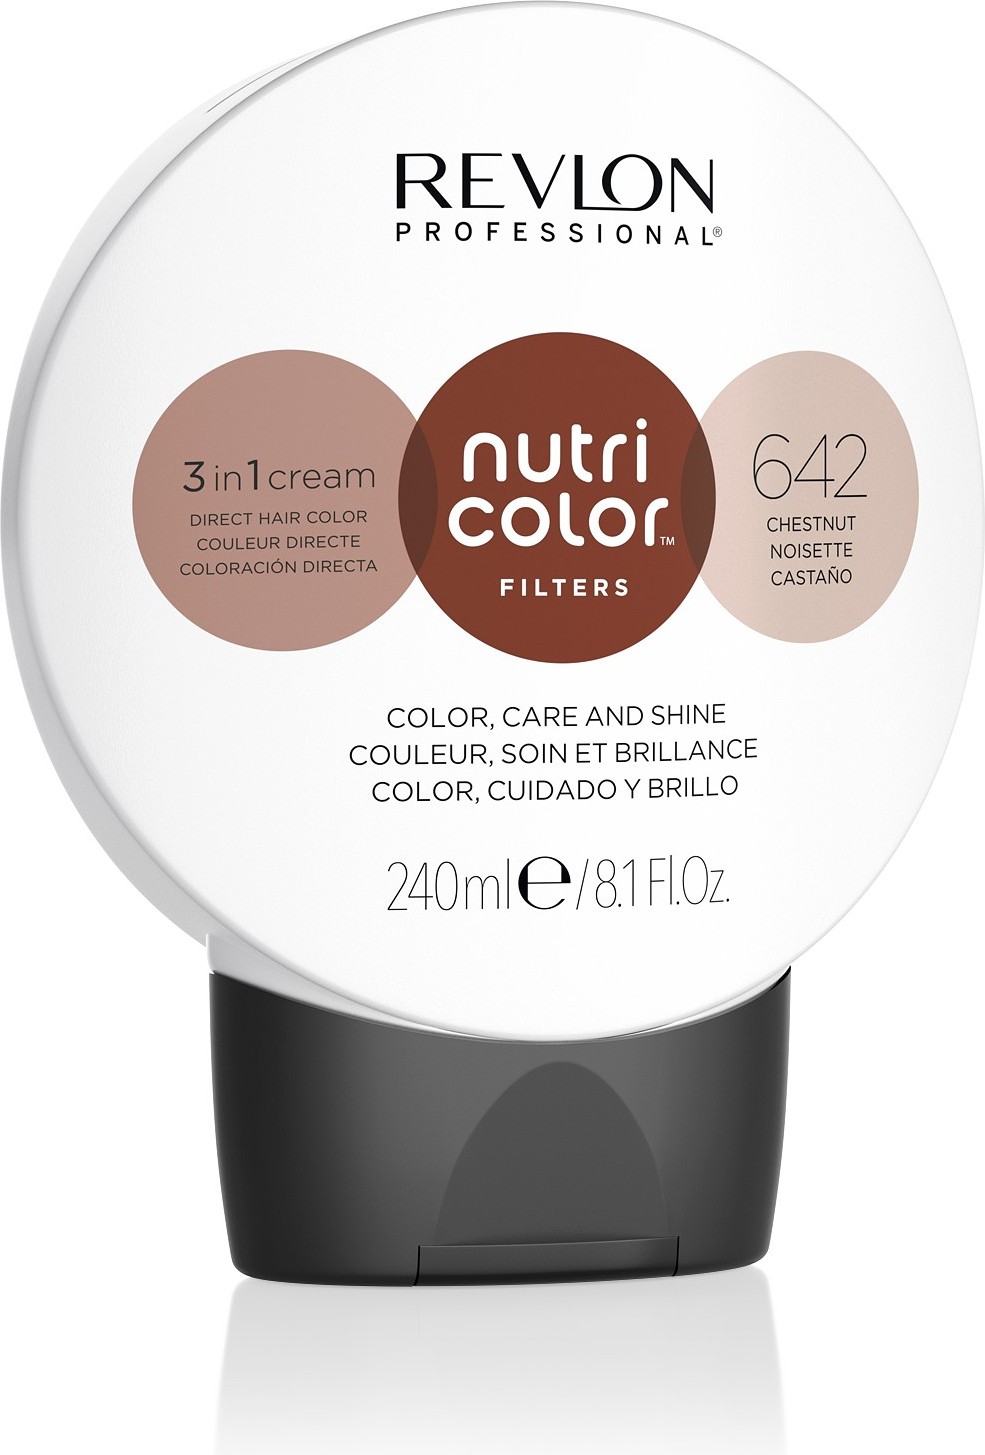  Revlon Professional Nutri Color Filters 642 Chestnut 240 ml 